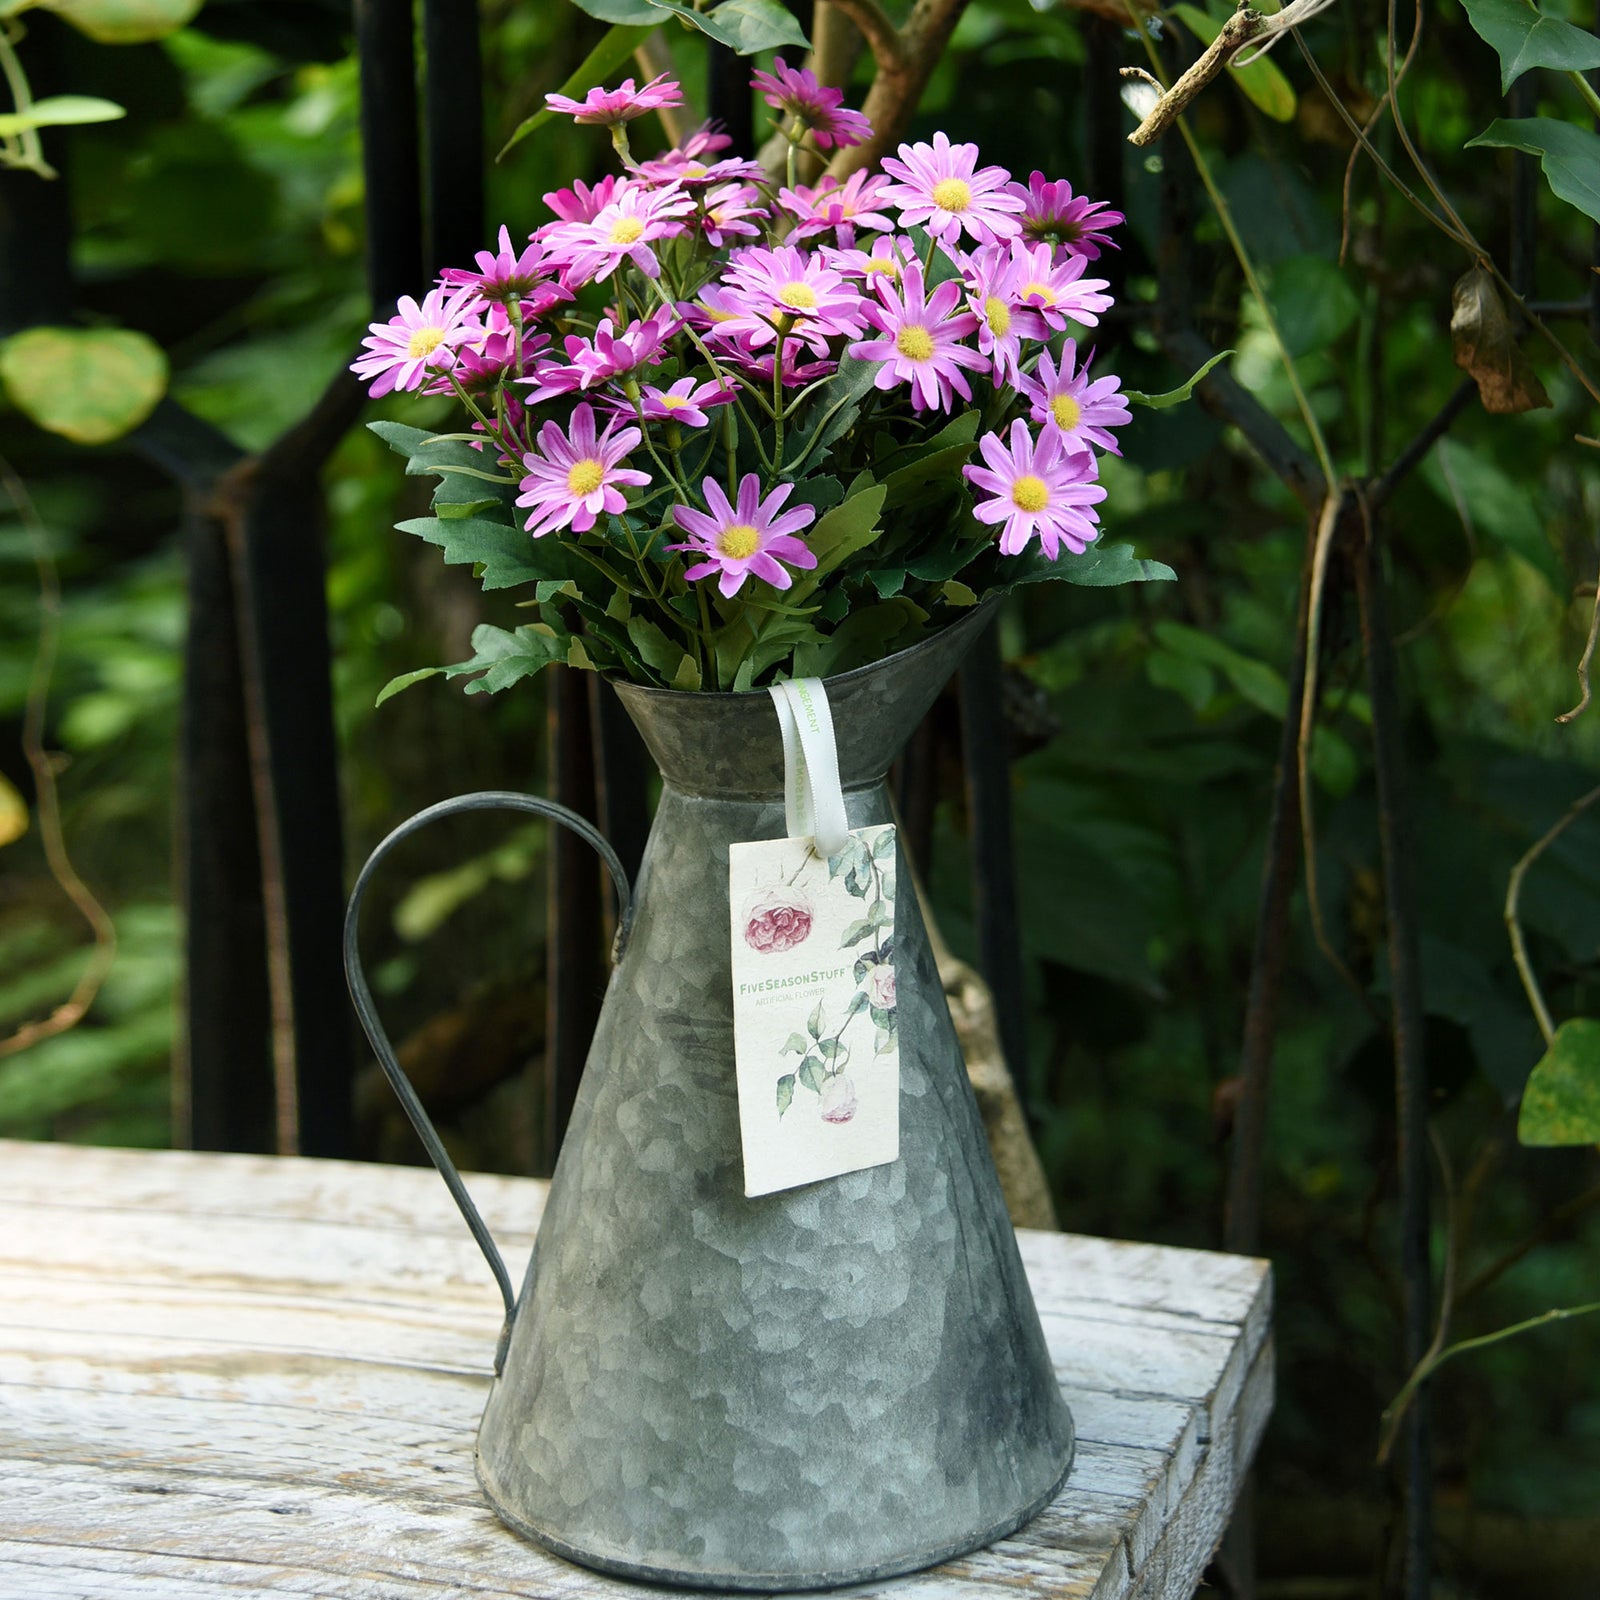 Daisy Silk Flowers Outdoor Artificial Flowers Arrangements (Majestic Purple) 2 Bunches